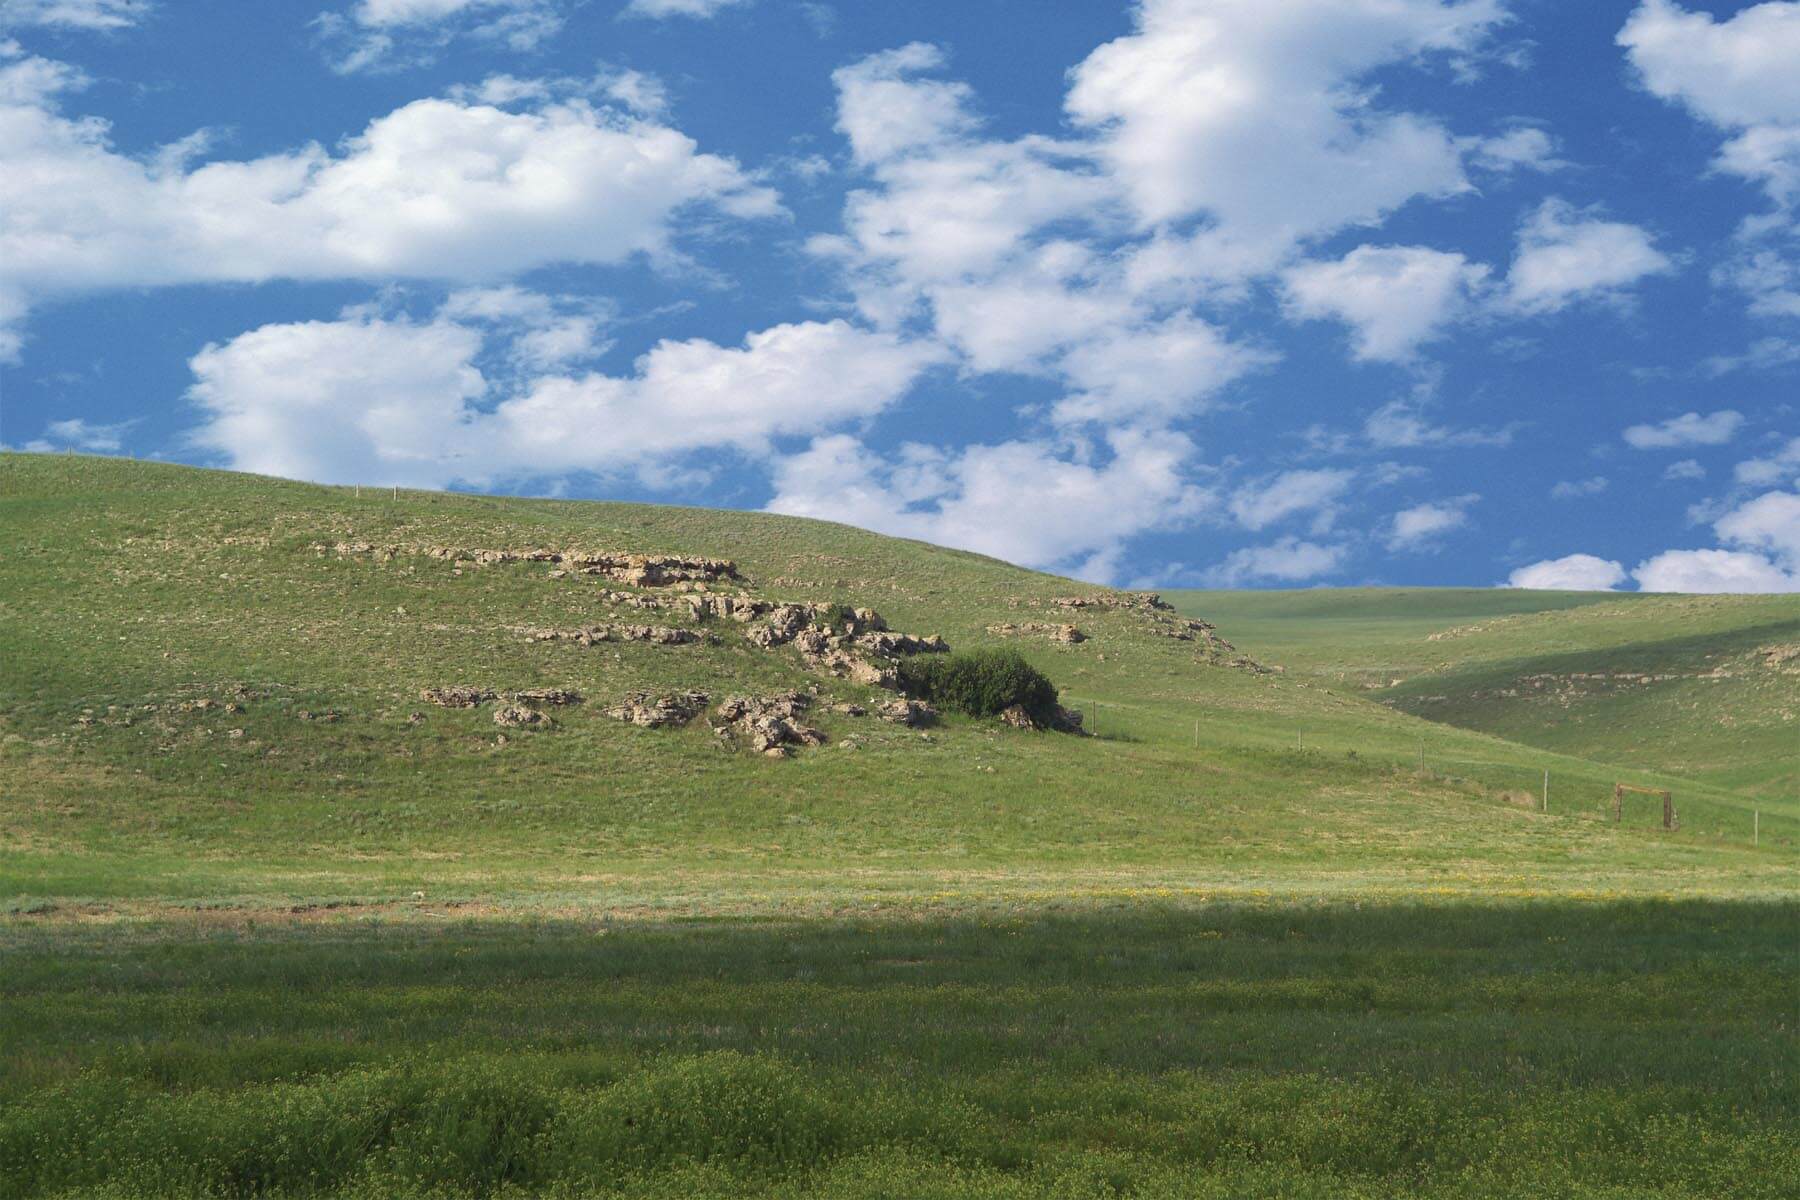 Remington Ranch landscape underneath a blue sky and white clouds